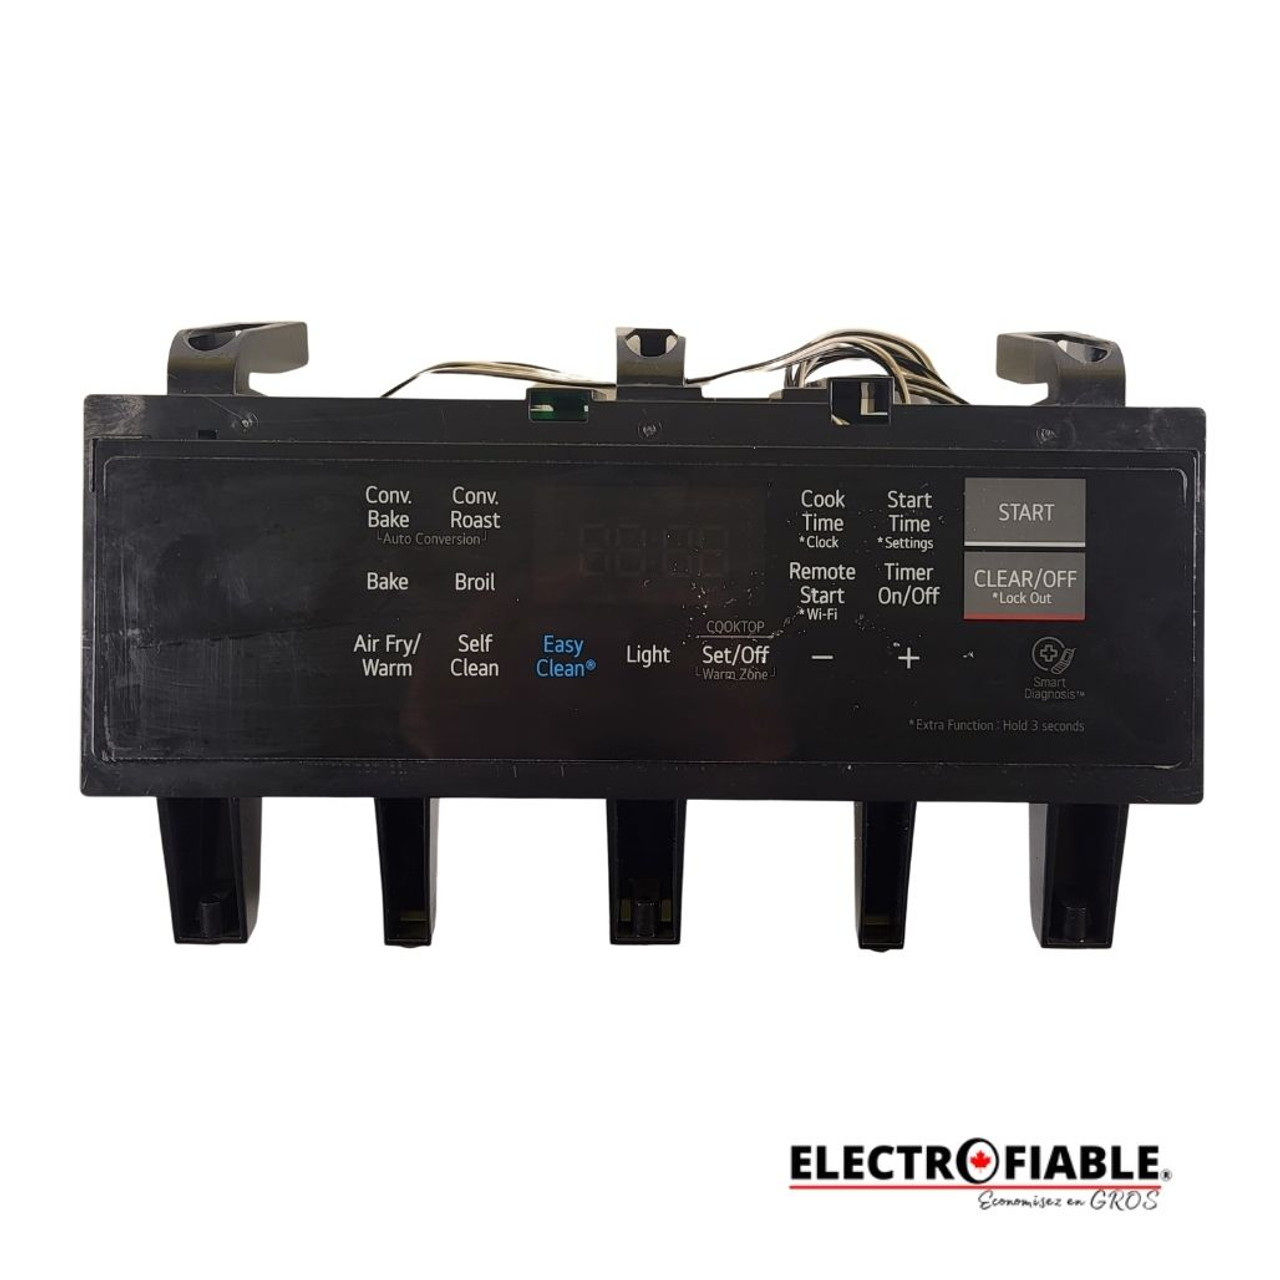 EBR89296001 Control panel for LG stove